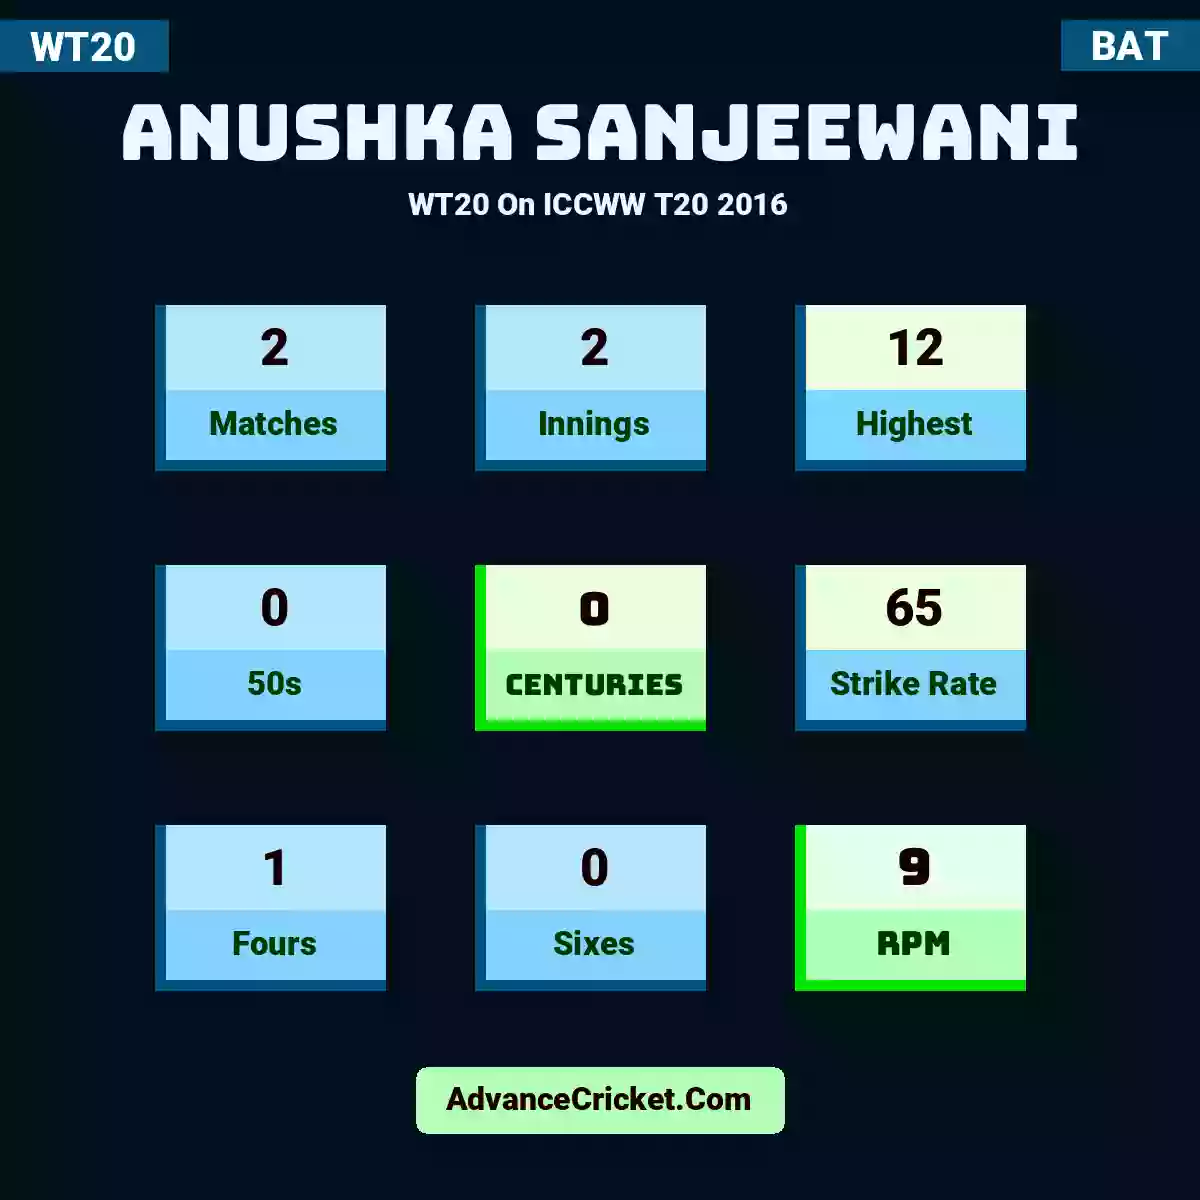 Anushka Sanjeewani WT20  On ICCWW T20 2016, Anushka Sanjeewani played 2 matches, scored 12 runs as highest, 0 half-centuries, and 0 centuries, with a strike rate of 65. A.Sanjeewani hit 1 fours and 0 sixes, with an RPM of 9.